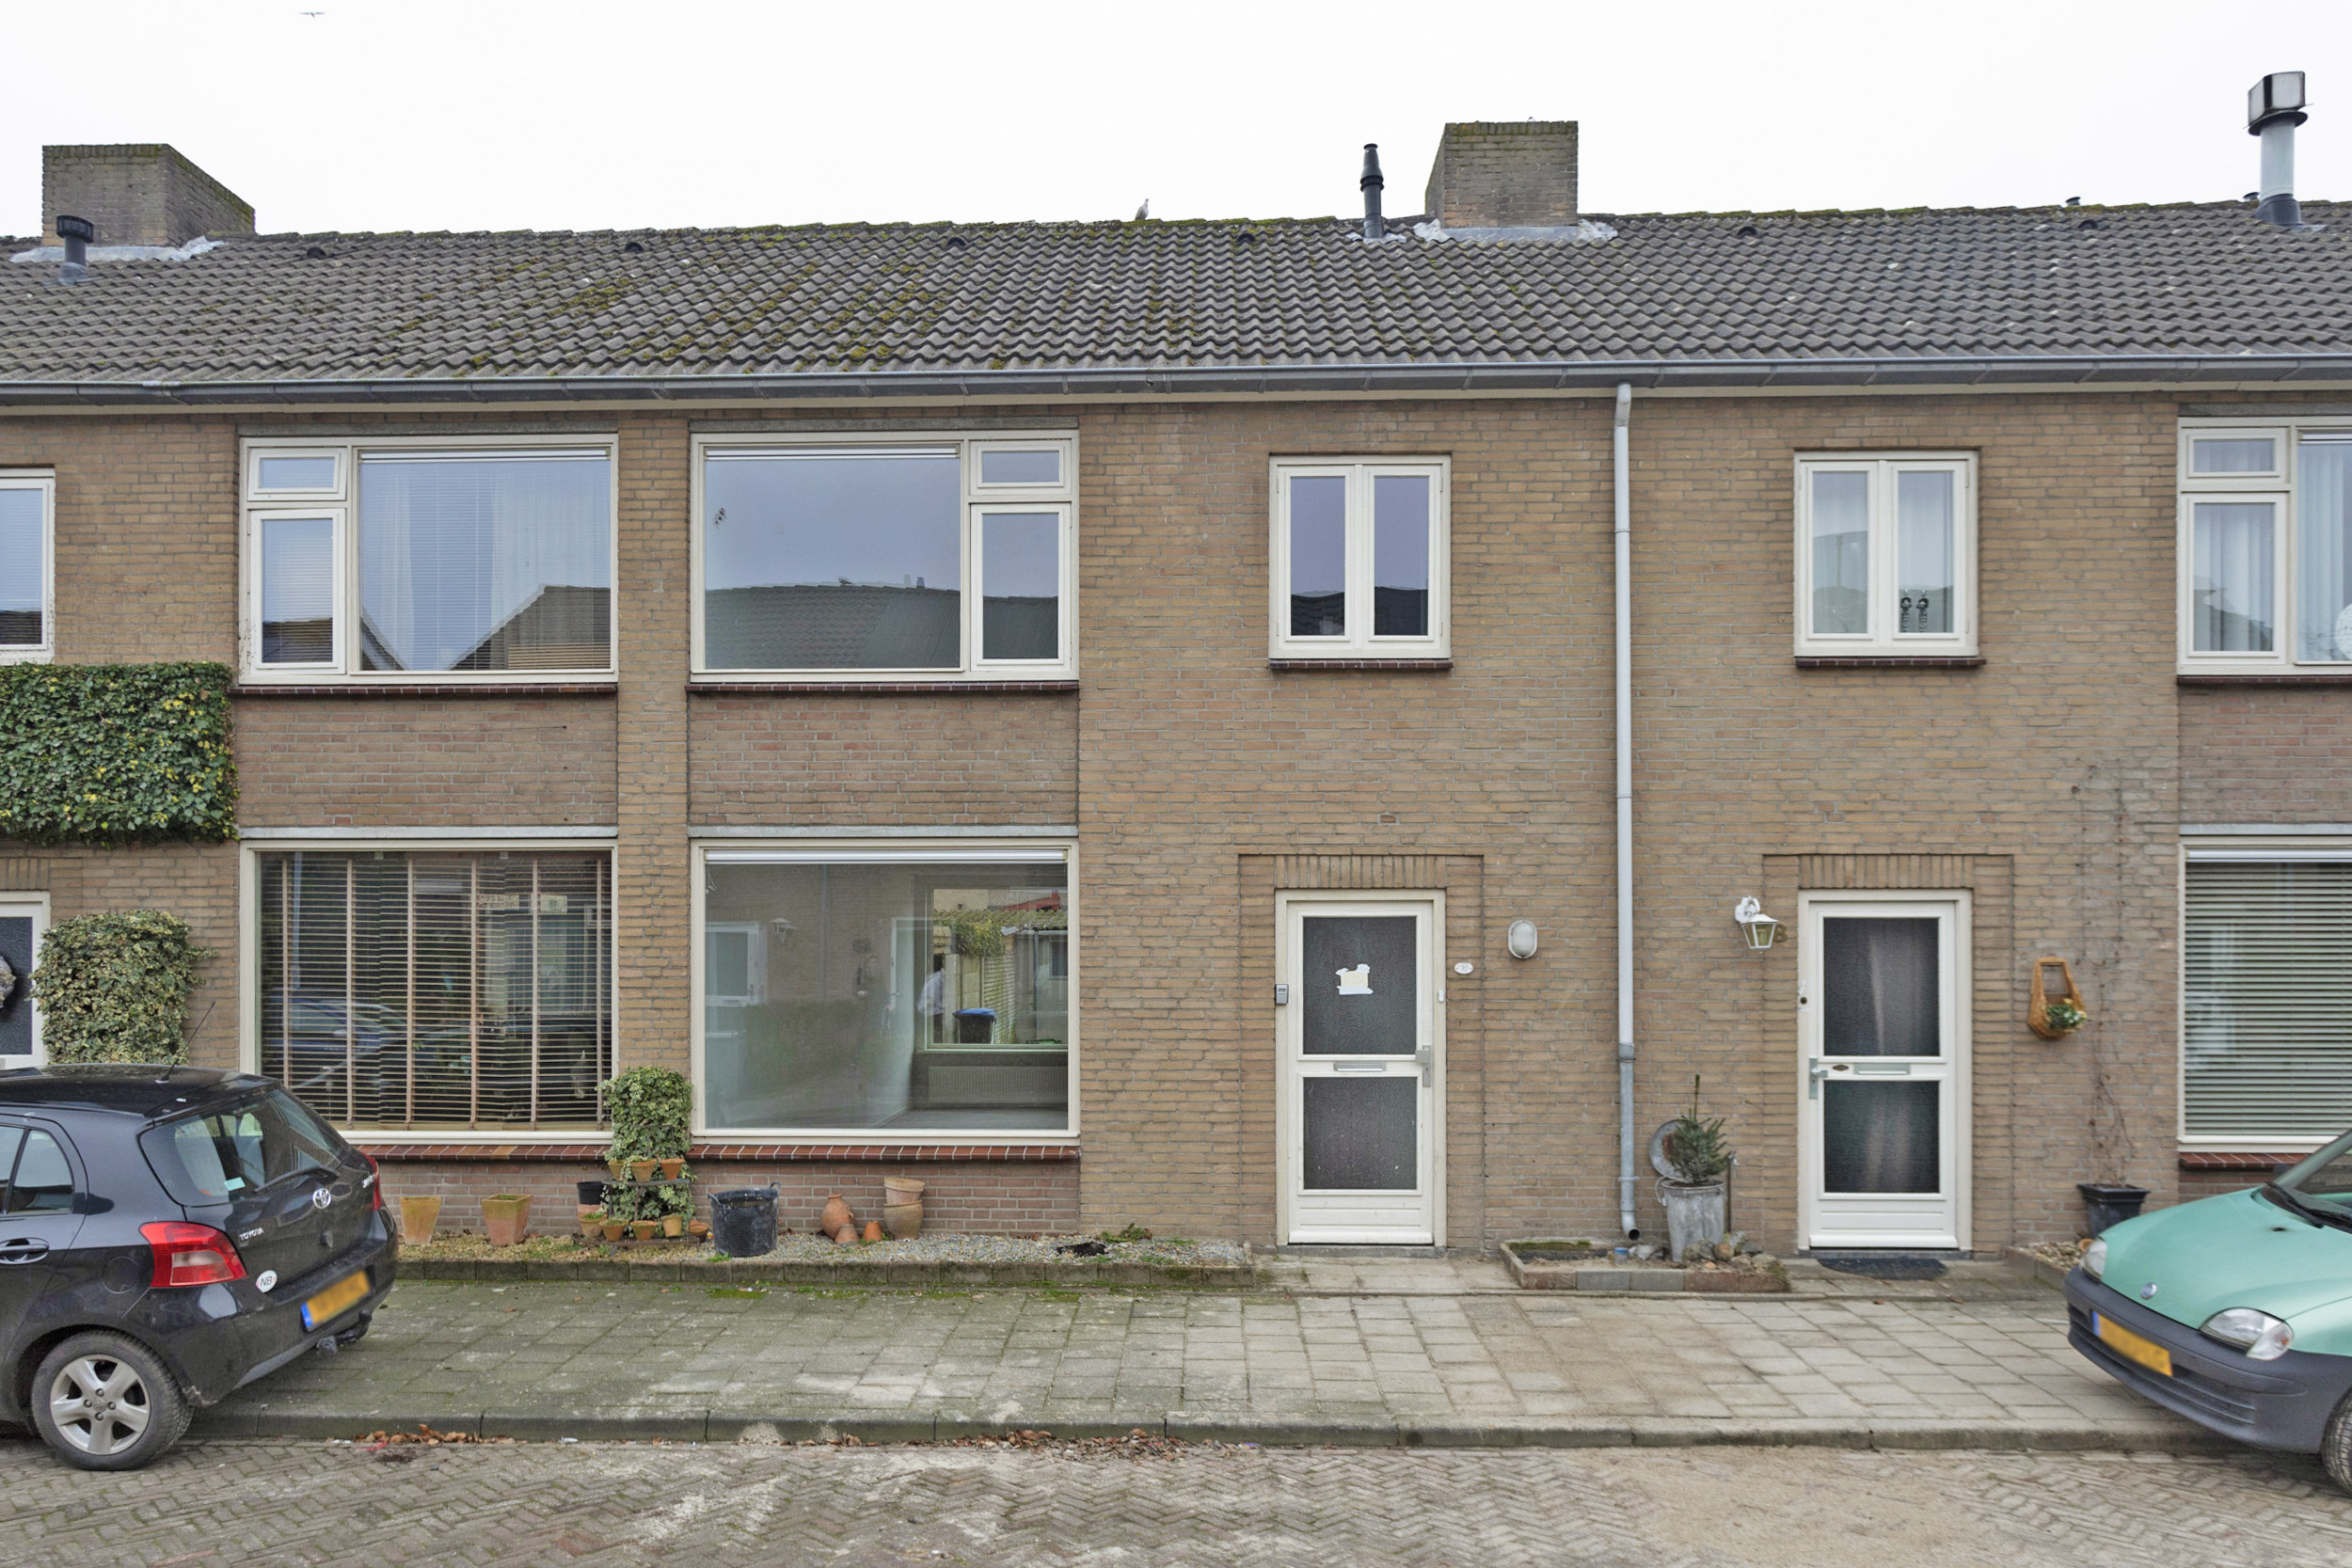 Botermakerstraat 10, 5061 ZL Oisterwijk, Nederland